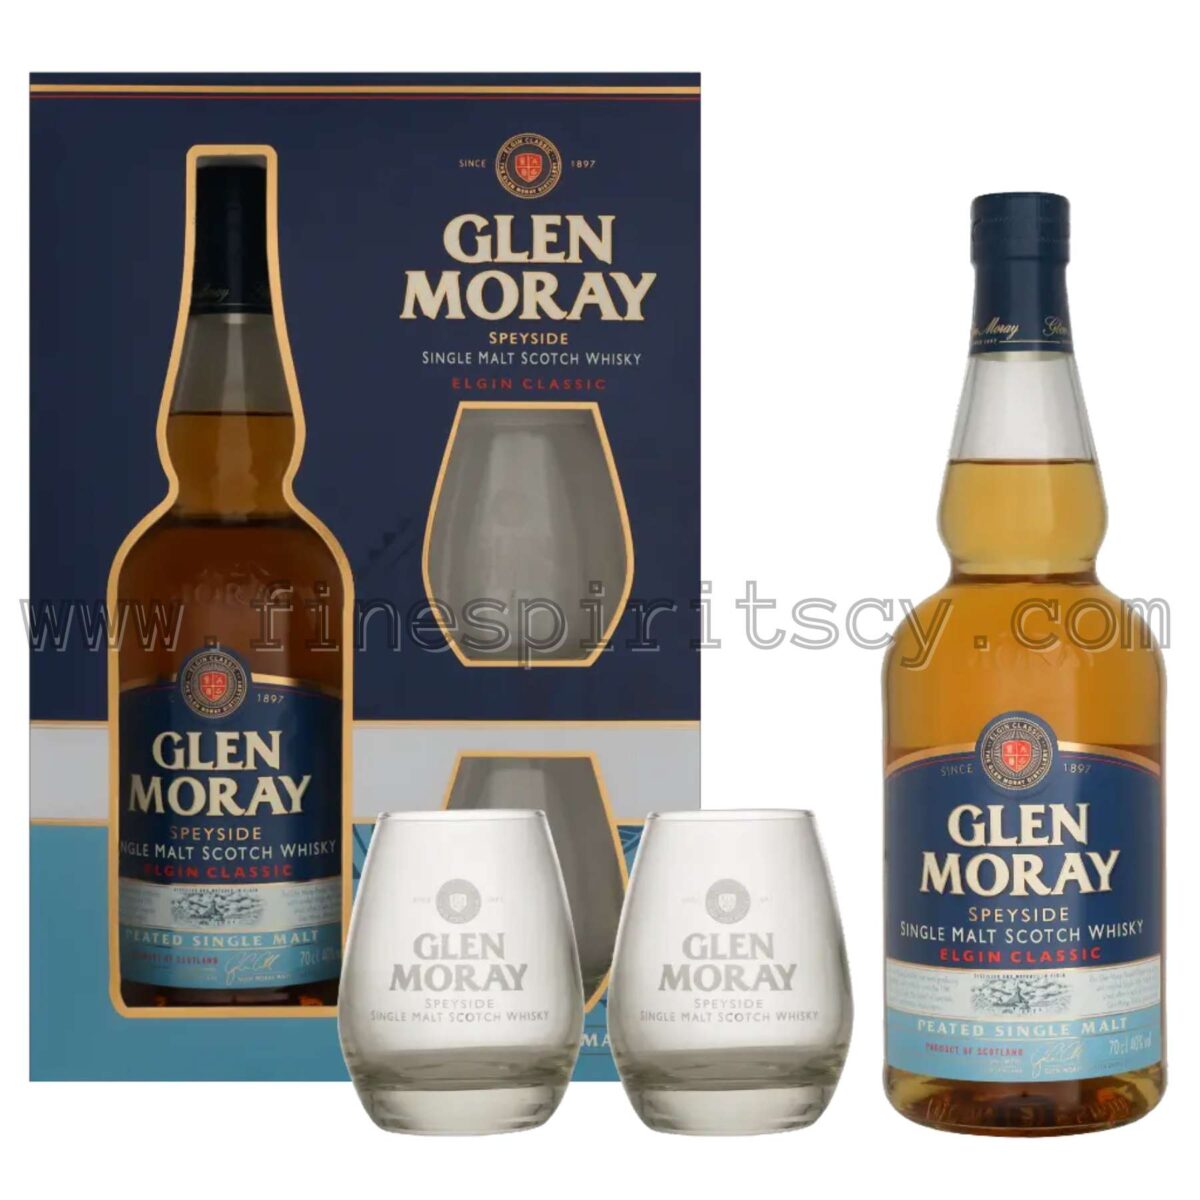 Glen Moray Peated Cask Finish Gift Box Set 2 Two Glasses Cyprus Price FSCY